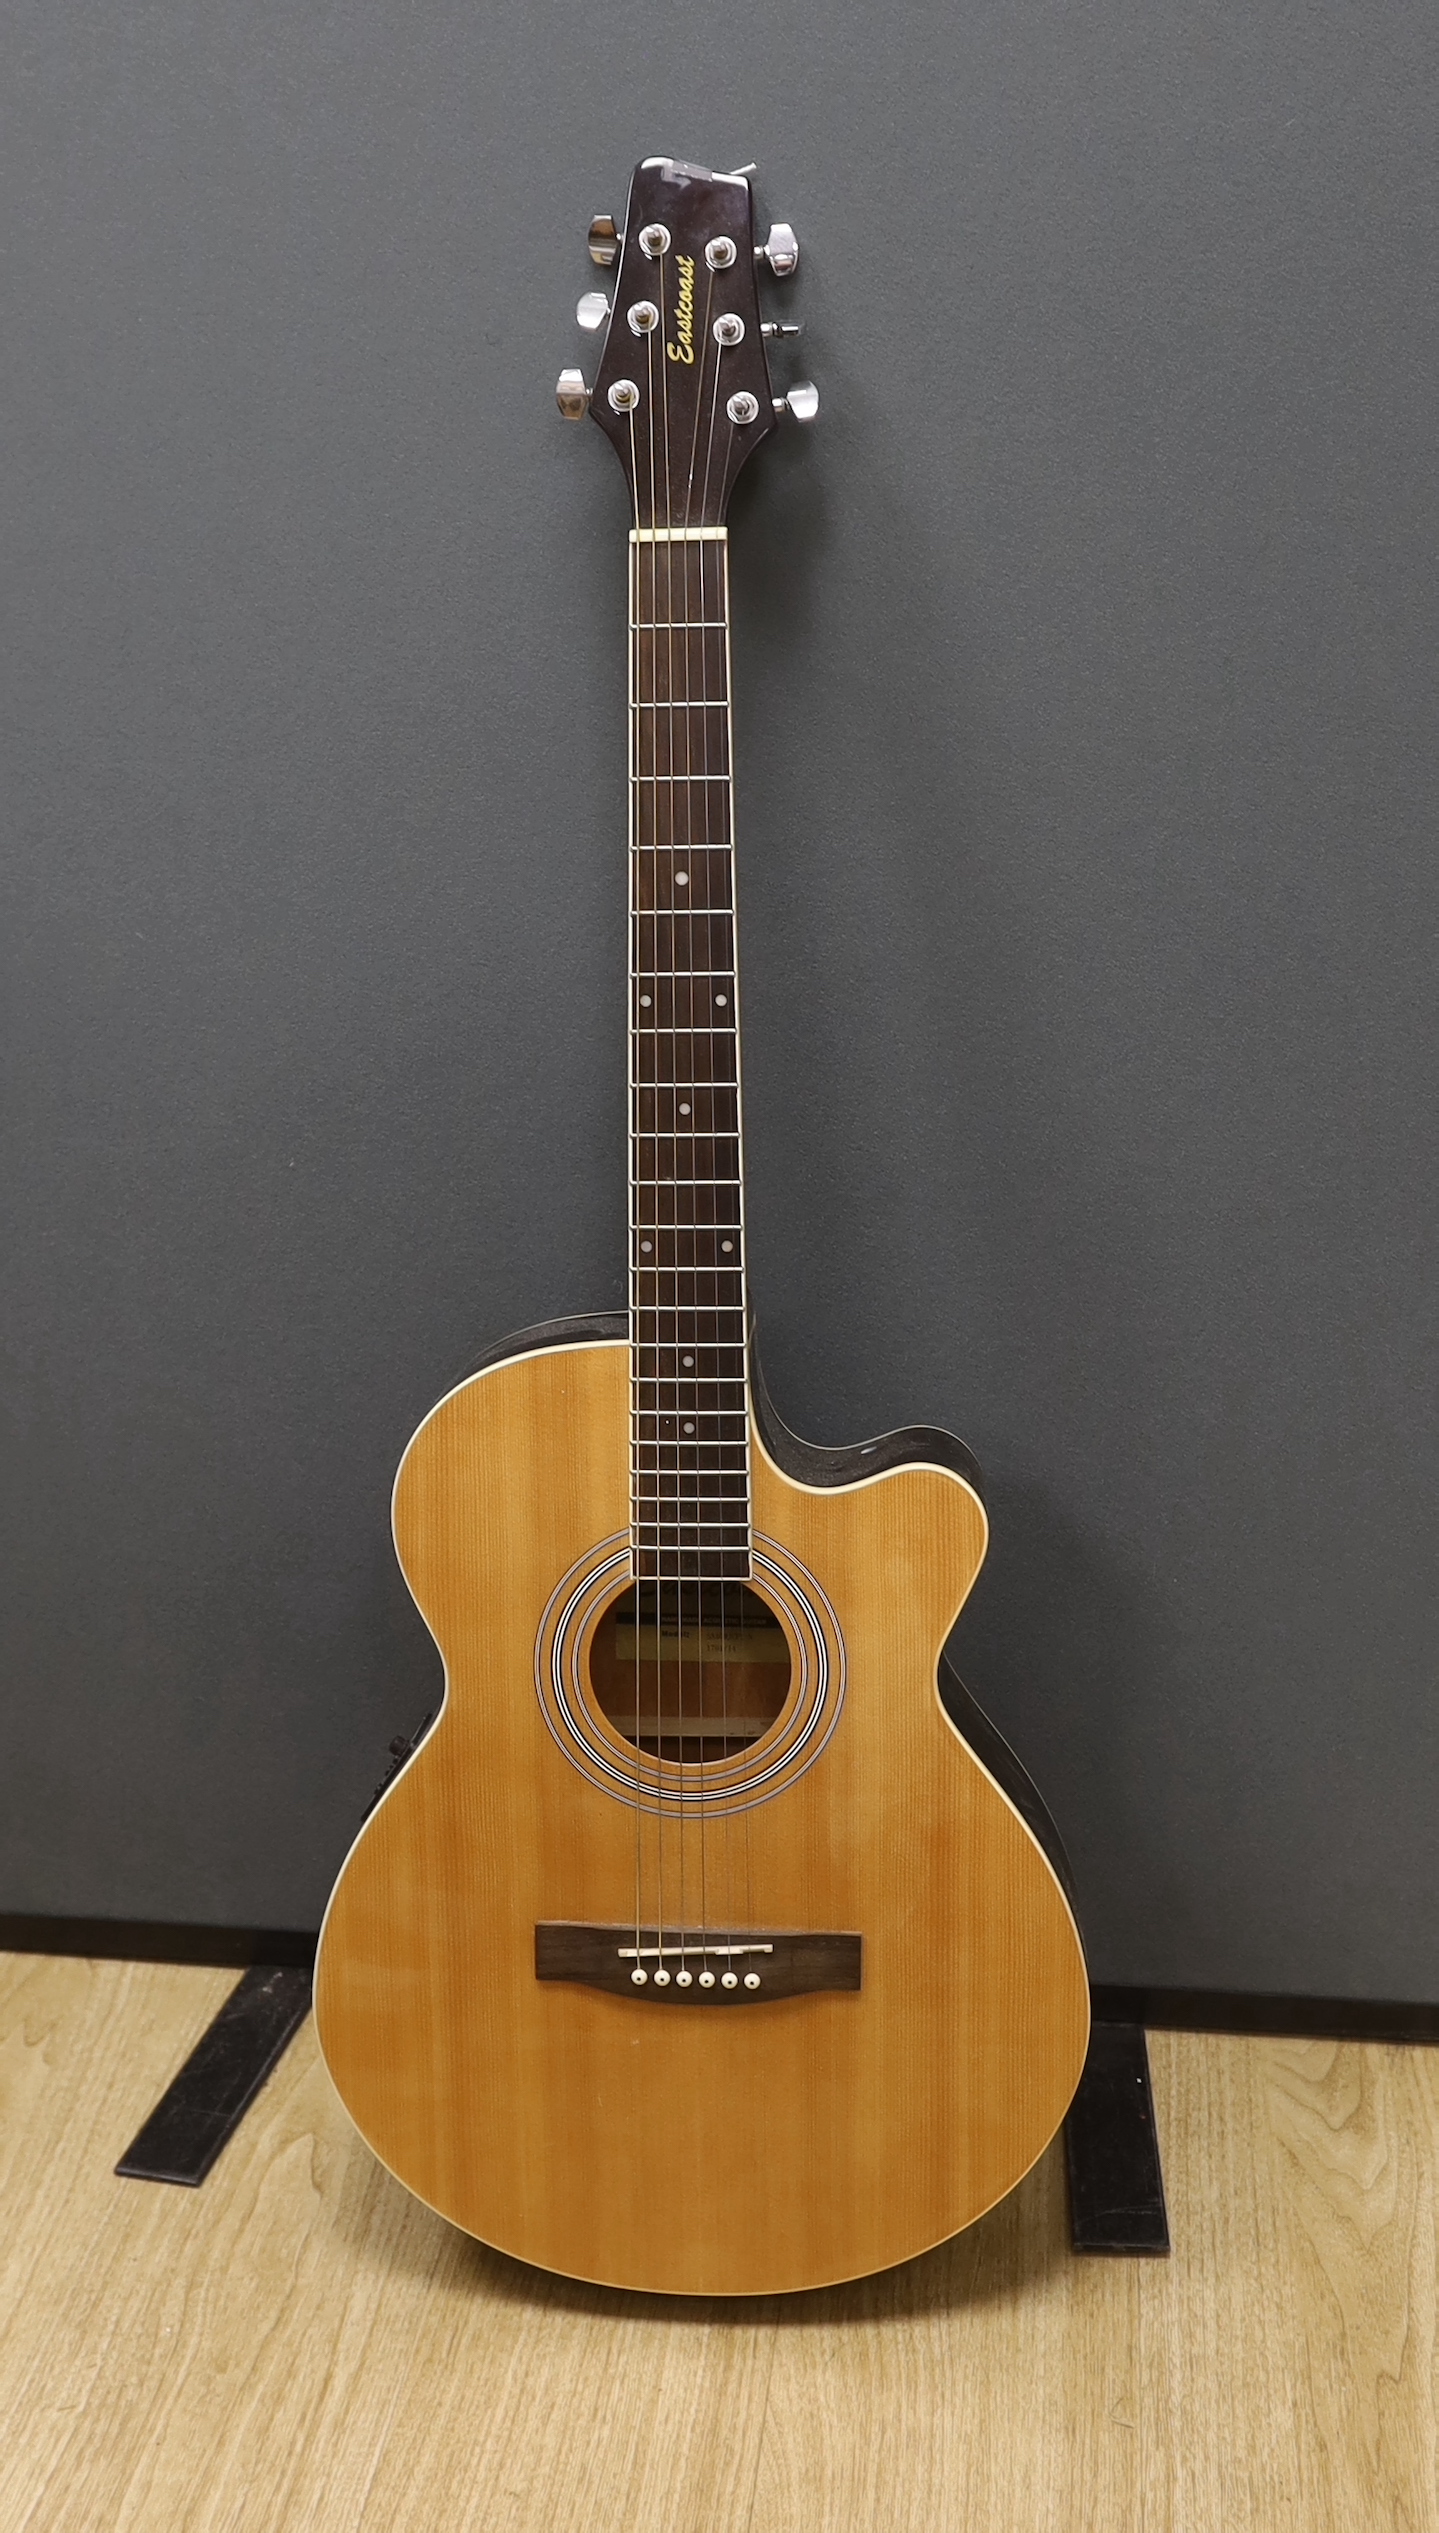 An Eastcoast electro-acoustic guitar, model no.SA40MJCFI-N